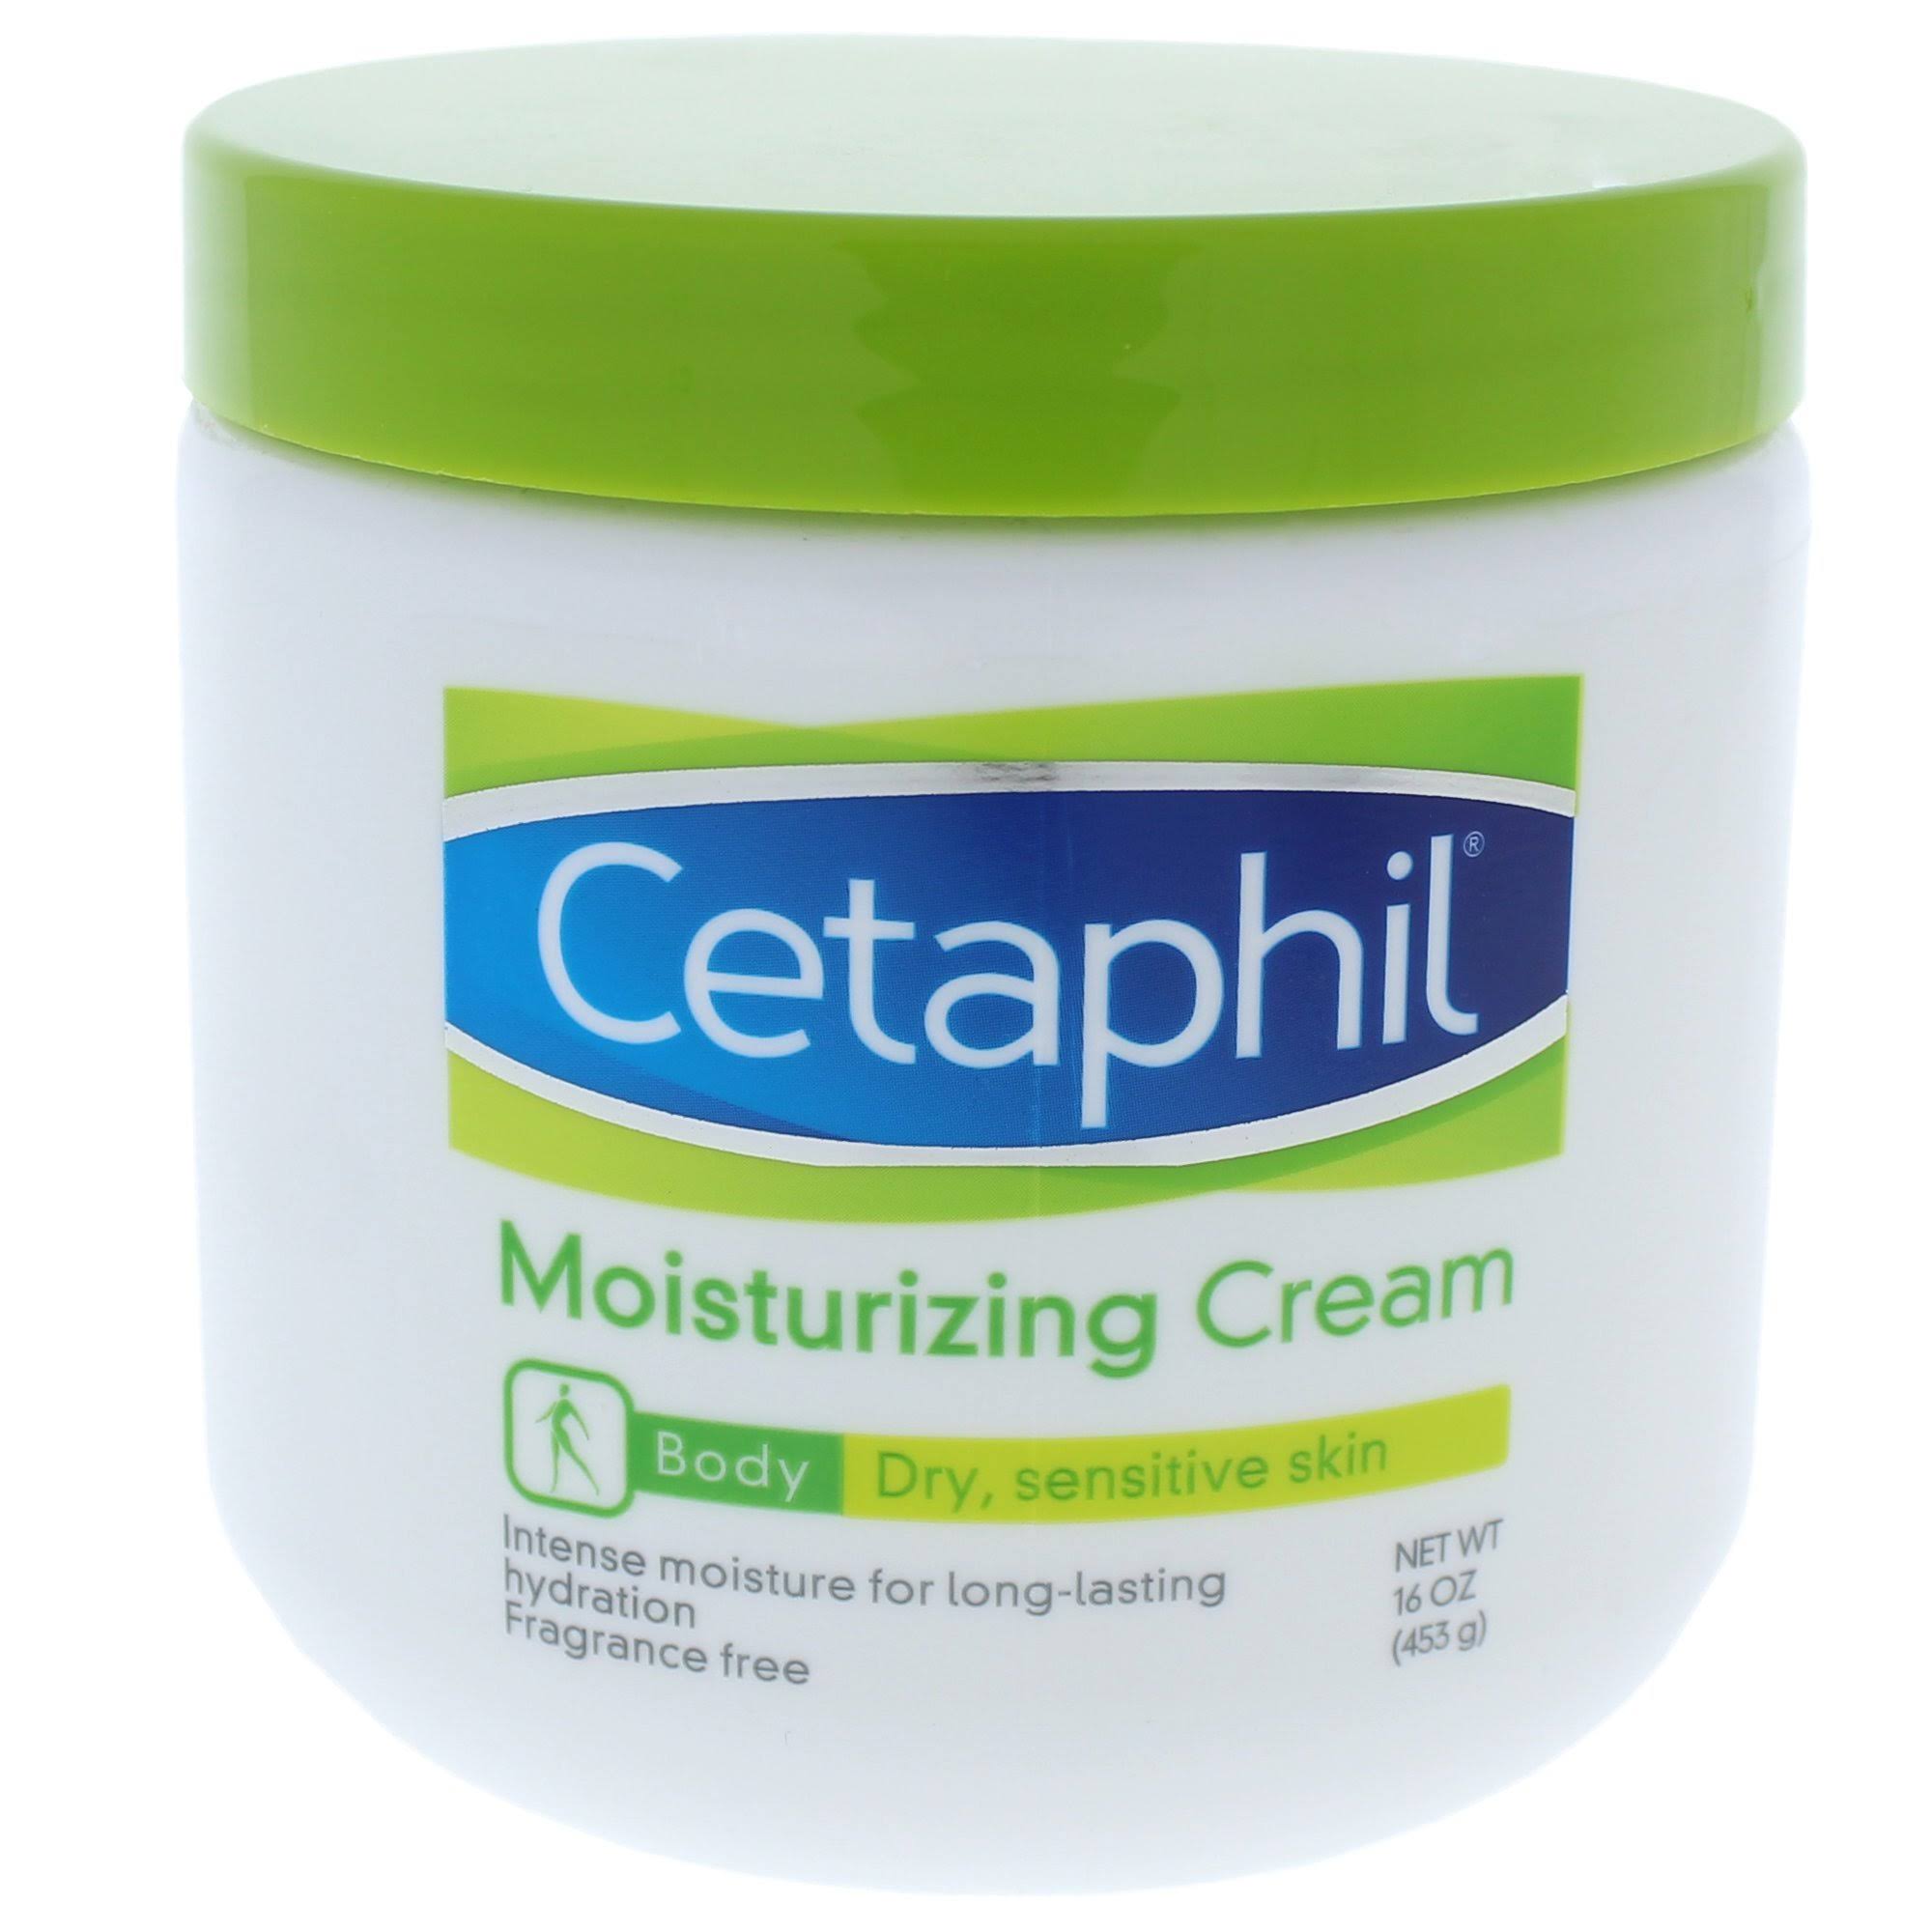 Cetaphil Moisturizing Cream - Fragrance Free, 16oz